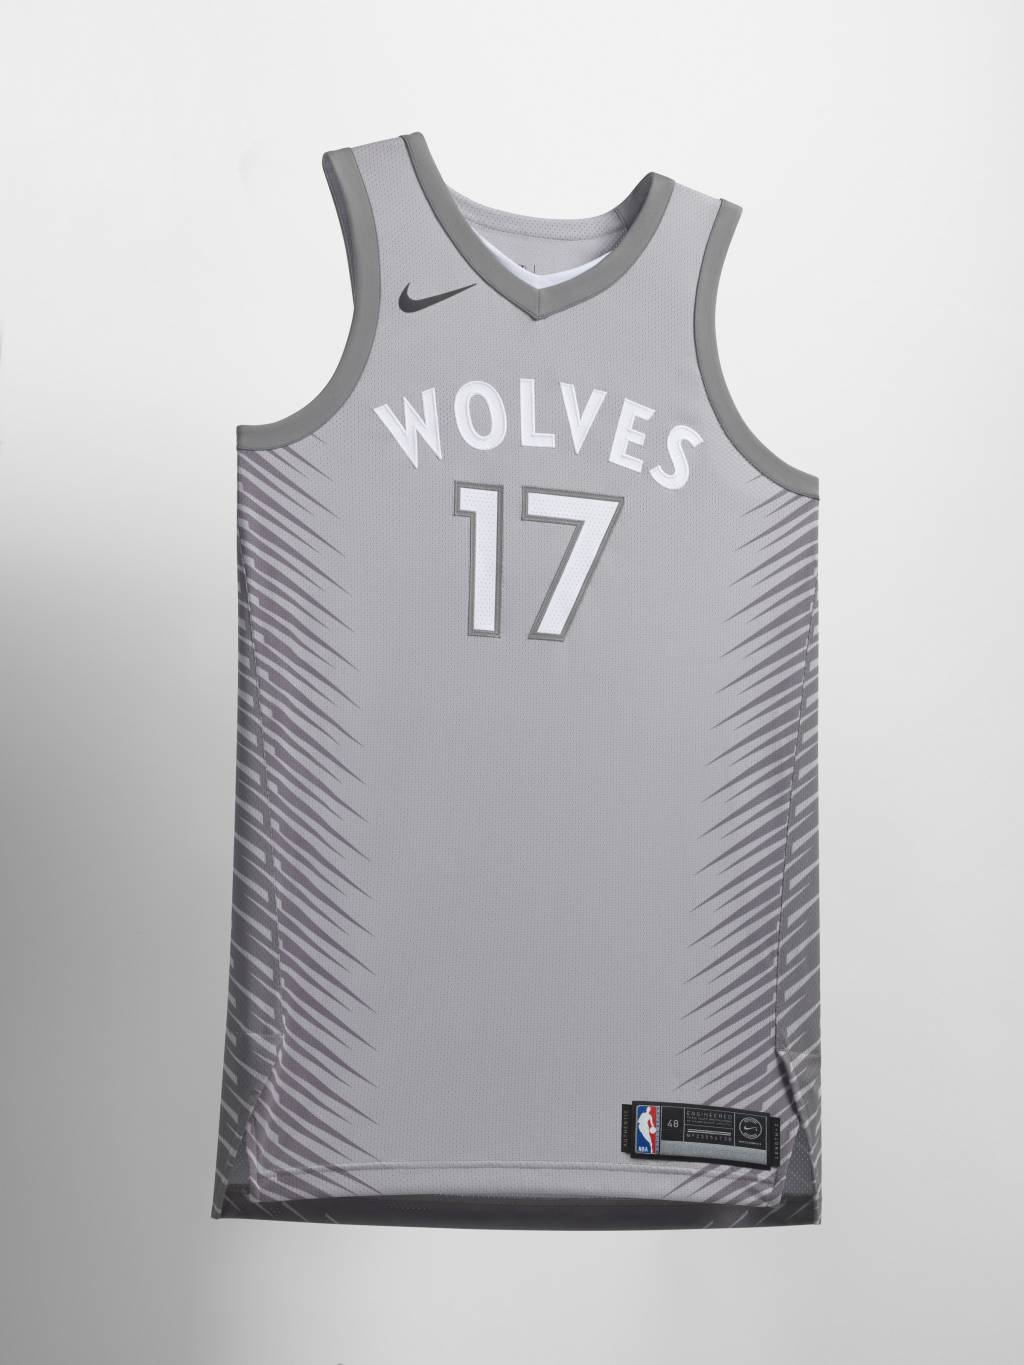 mn timberwolves city edition jersey